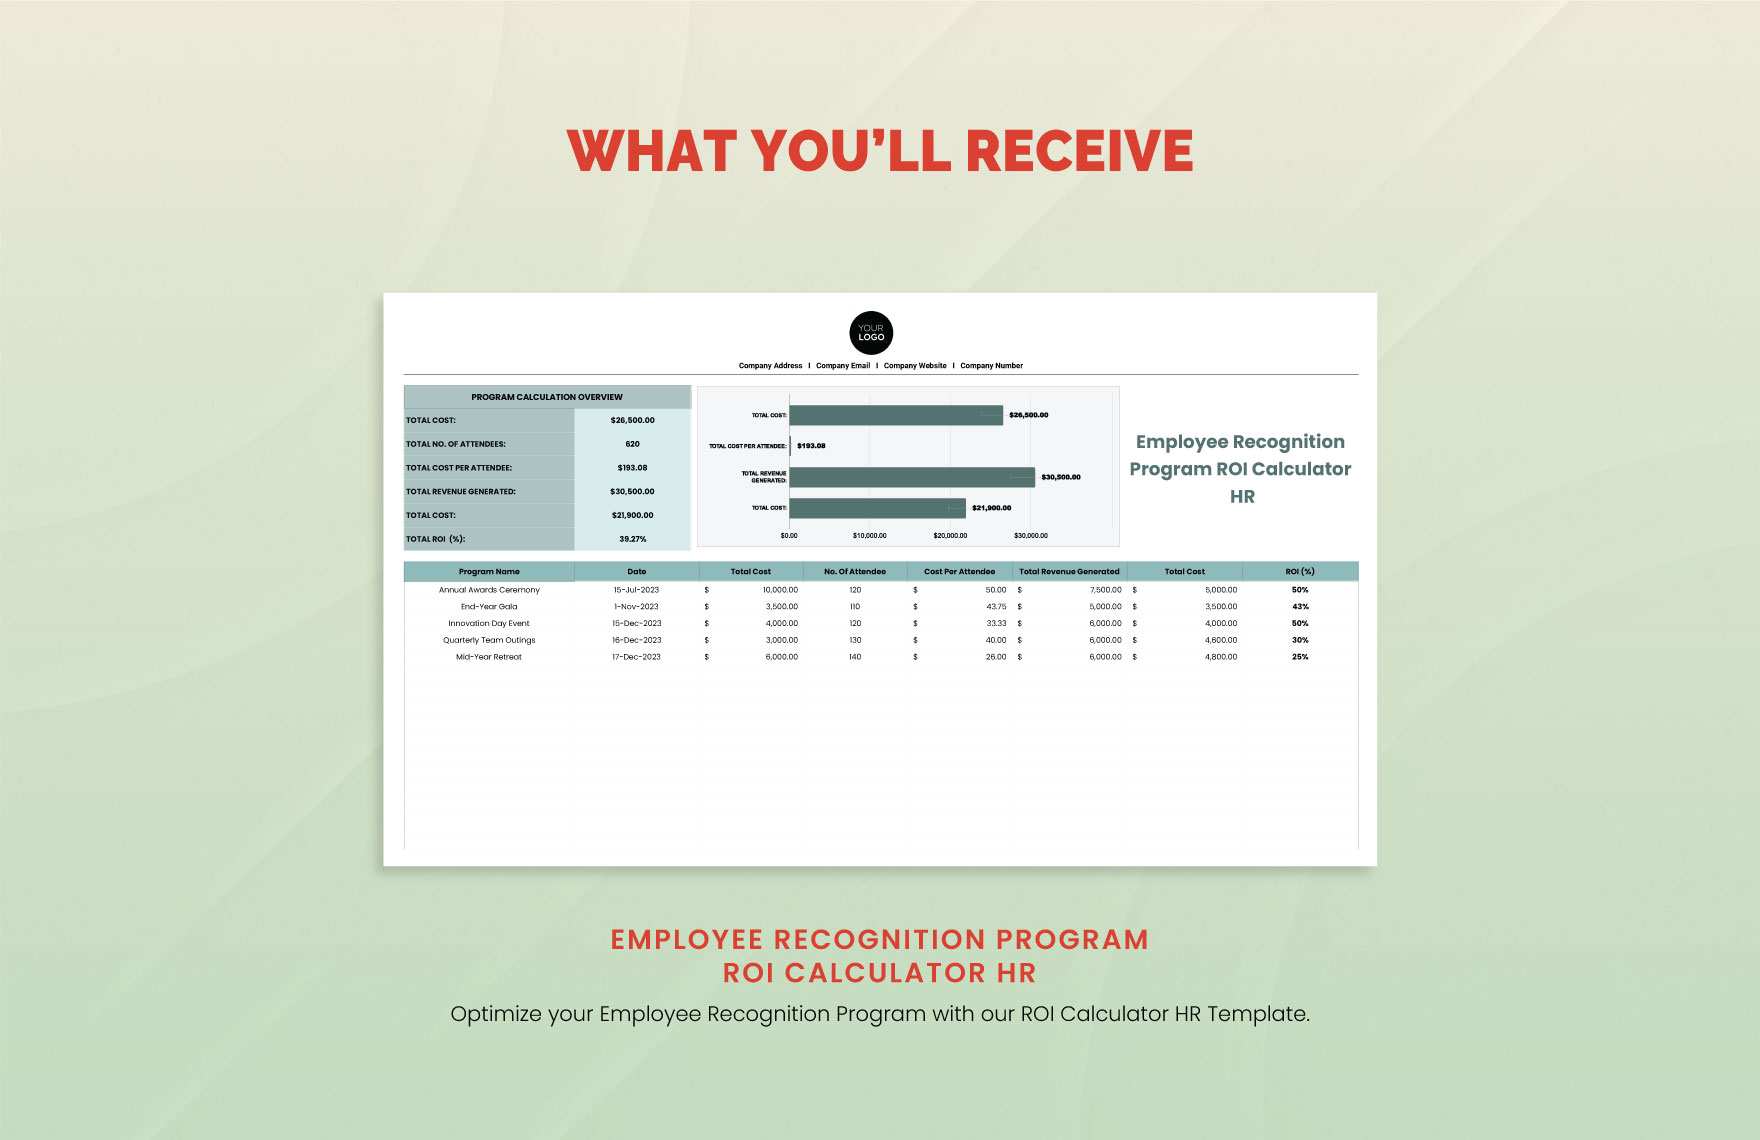 Employee Recognition Program ROI Calculator HR Template